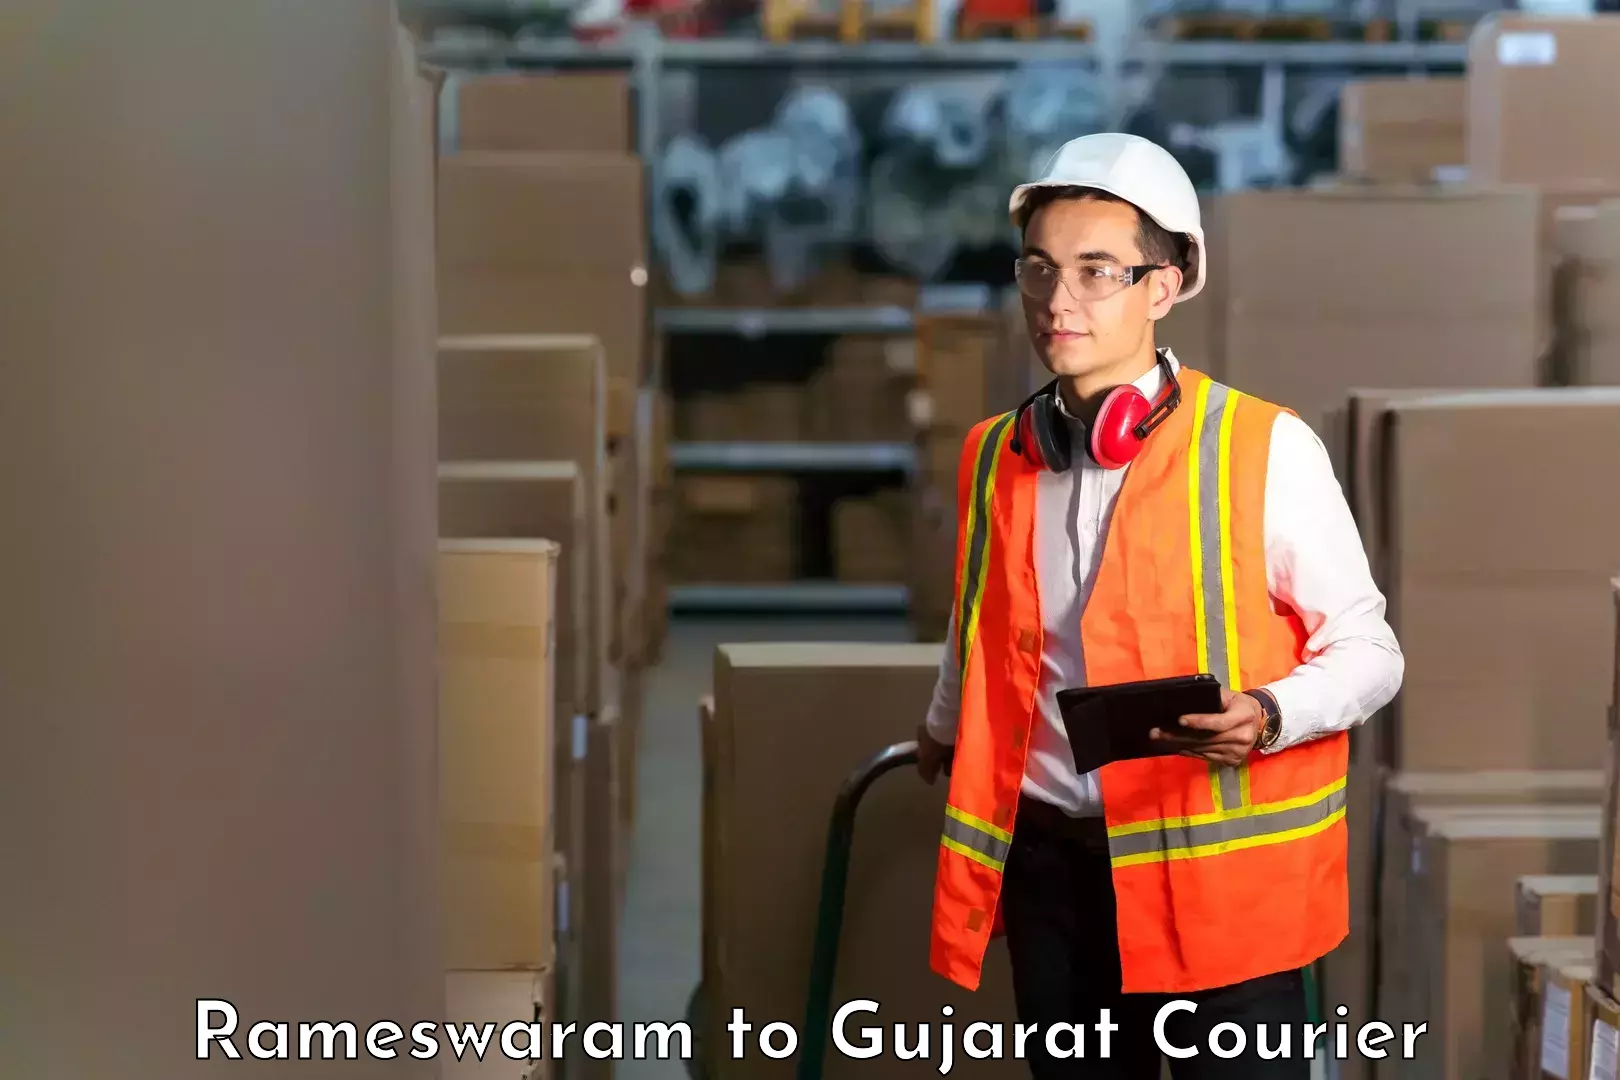 Courier service partnerships Rameswaram to Modasa